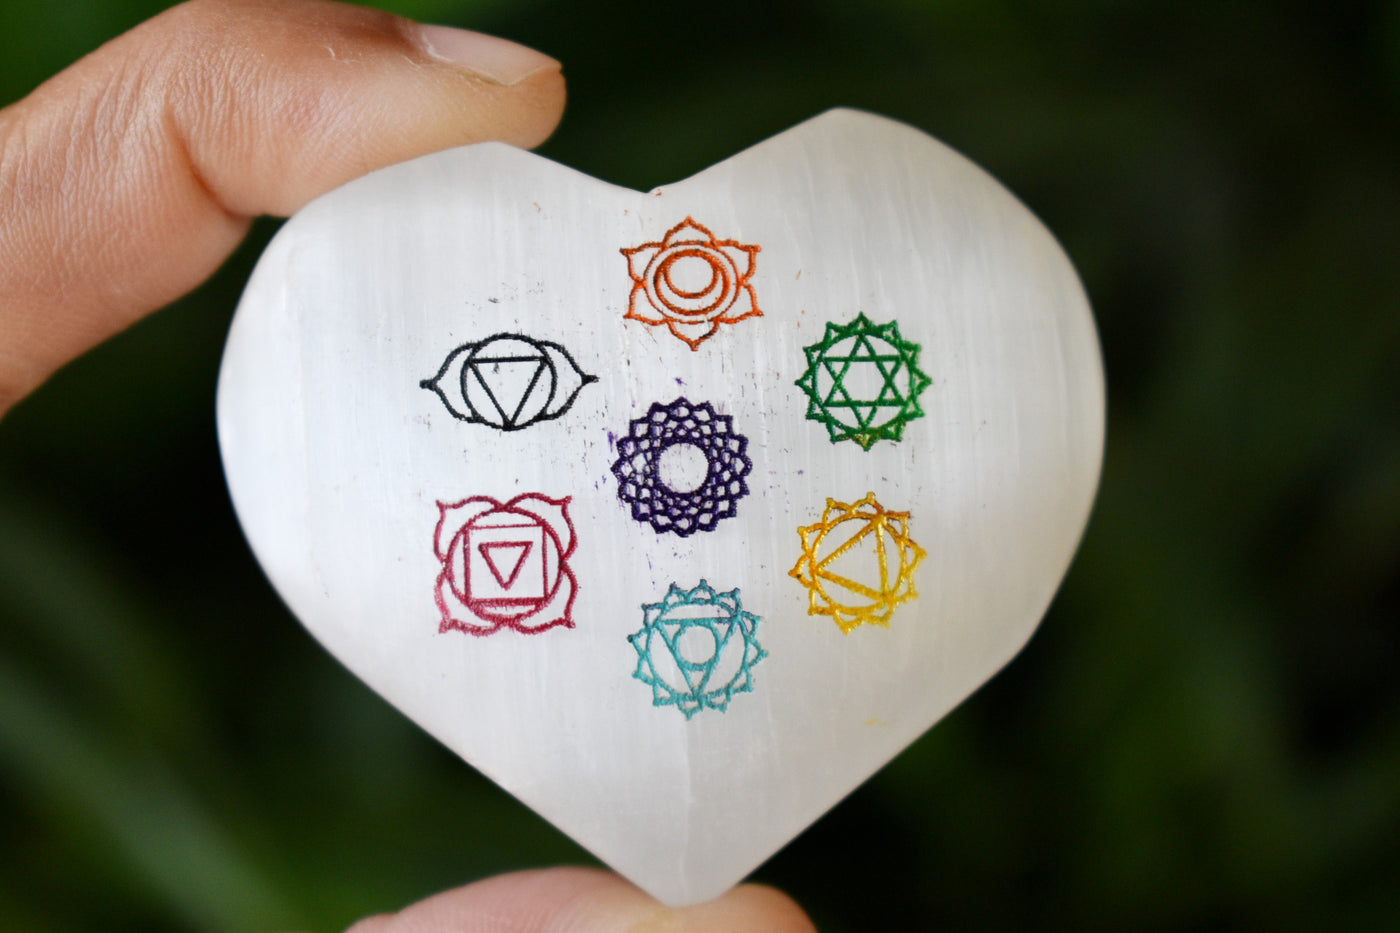 2" Selenite Heart with 7 Chakra Symbols